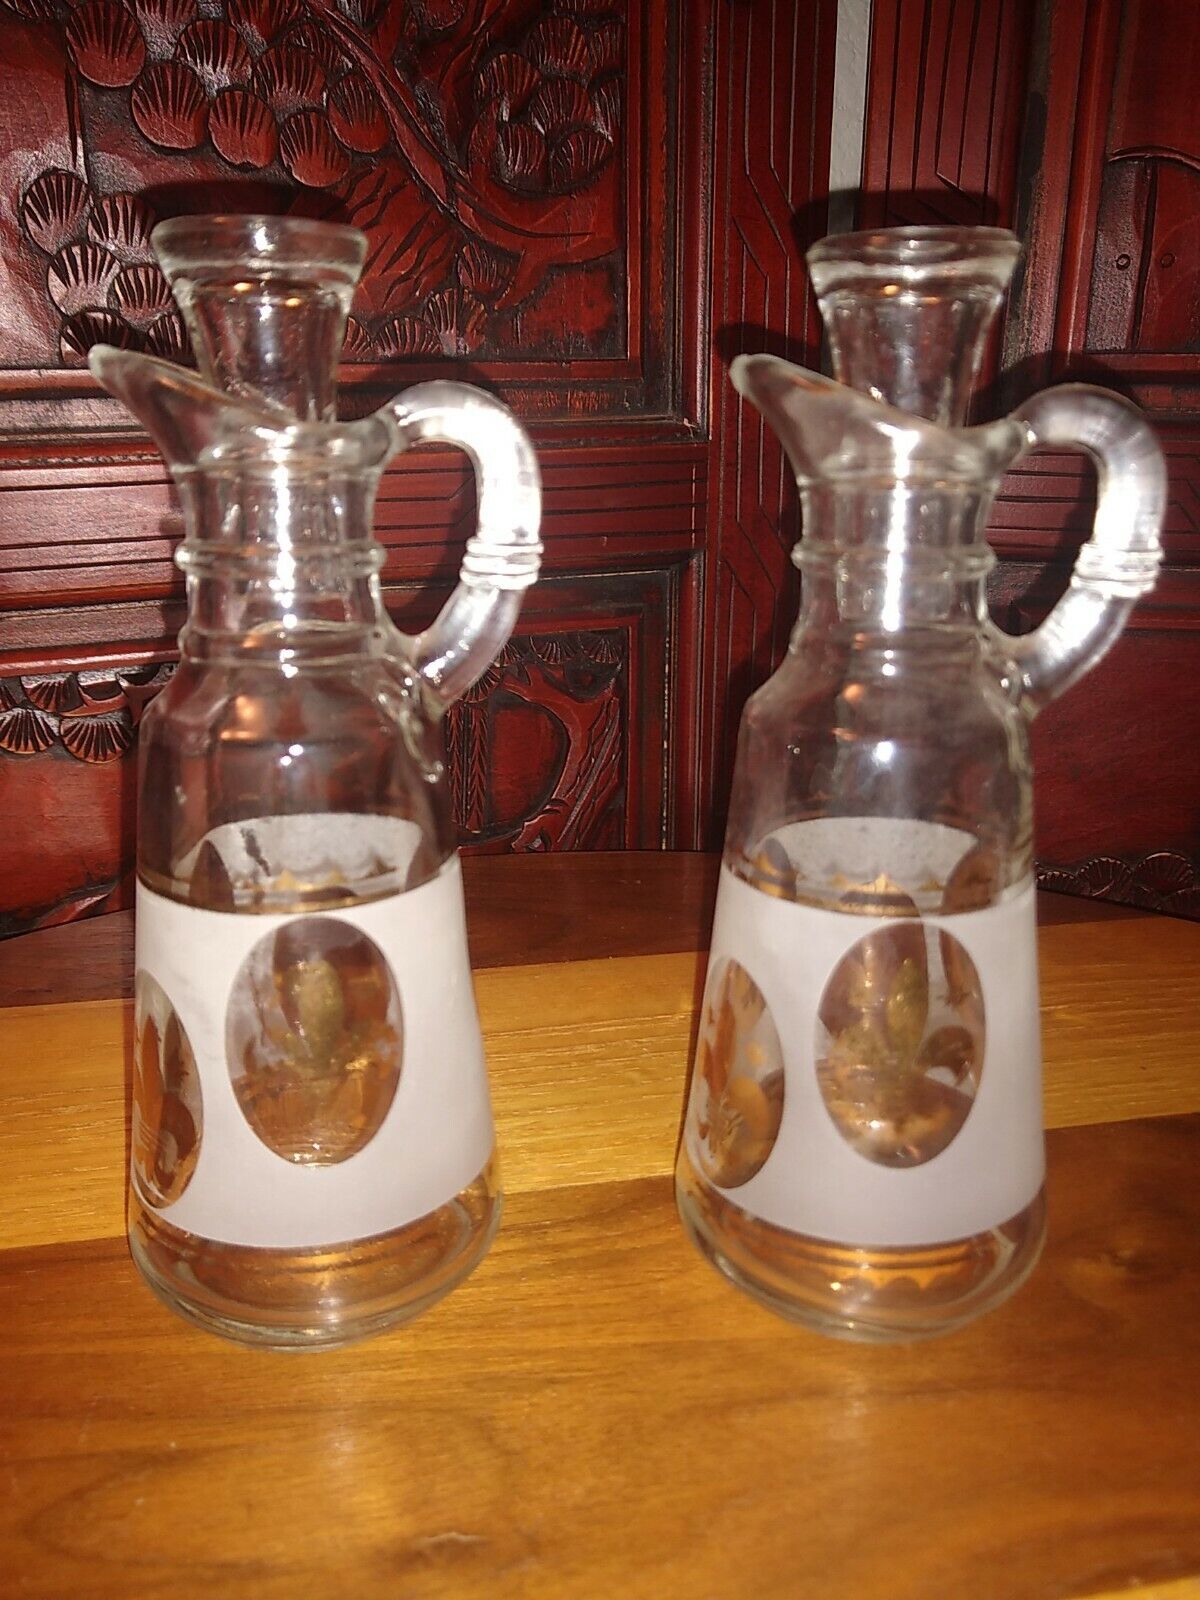 Vintage Glass Oil and Vinegar cruet Fixed price for sale Factory outlet Bottles embellished fr gold